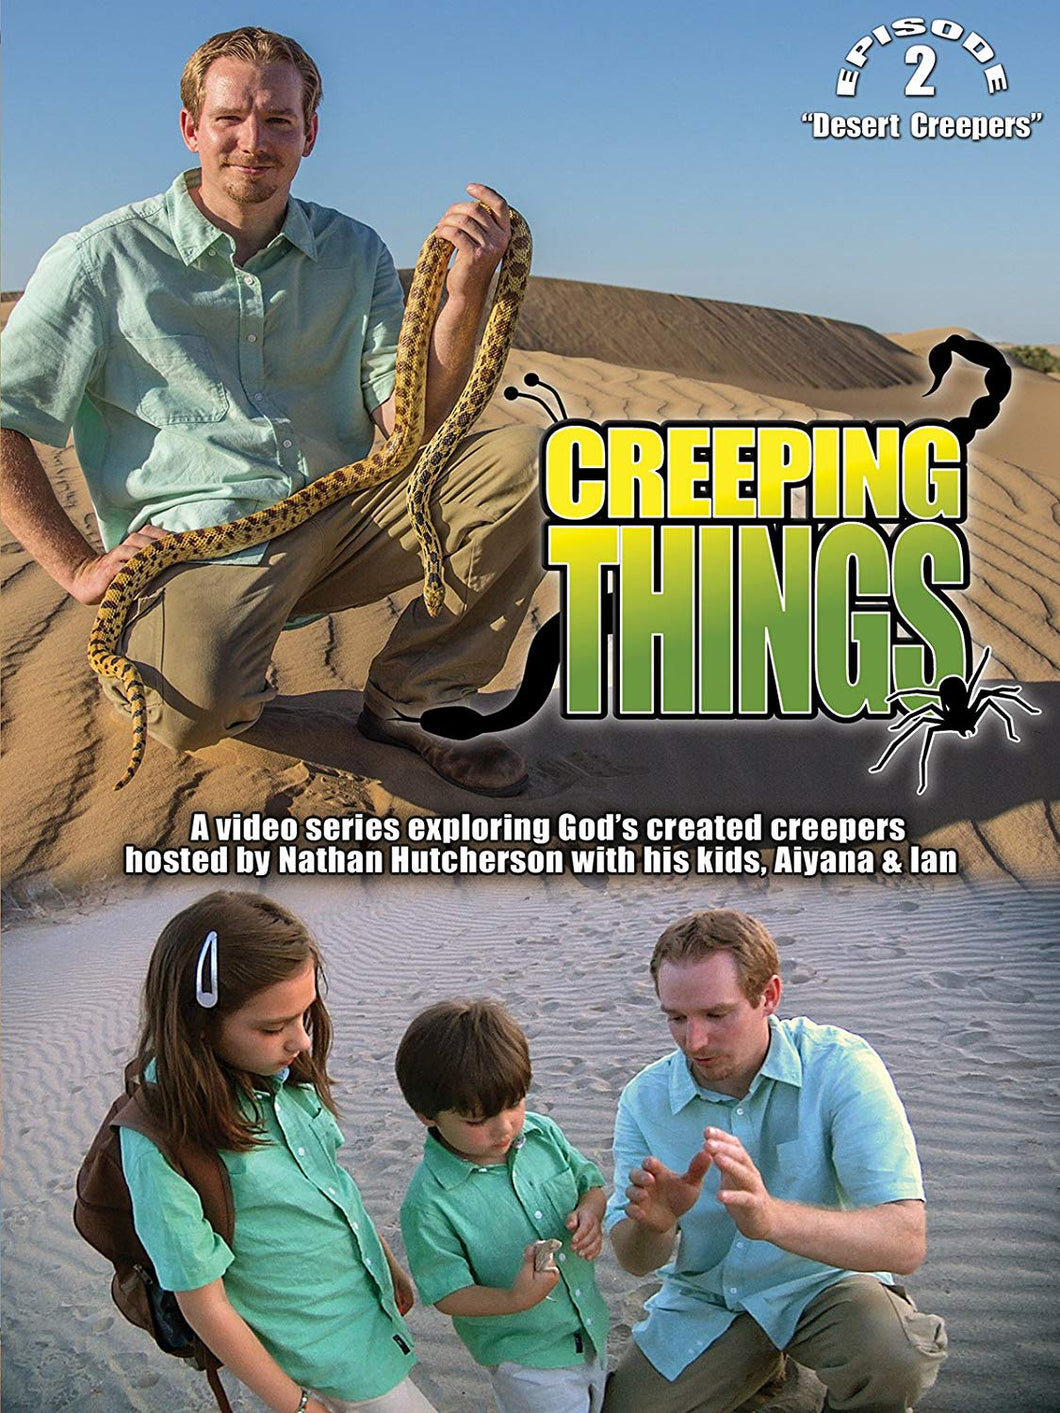 Creeping Things Vol.2 Desert Creepers - DVD (Episode 2)